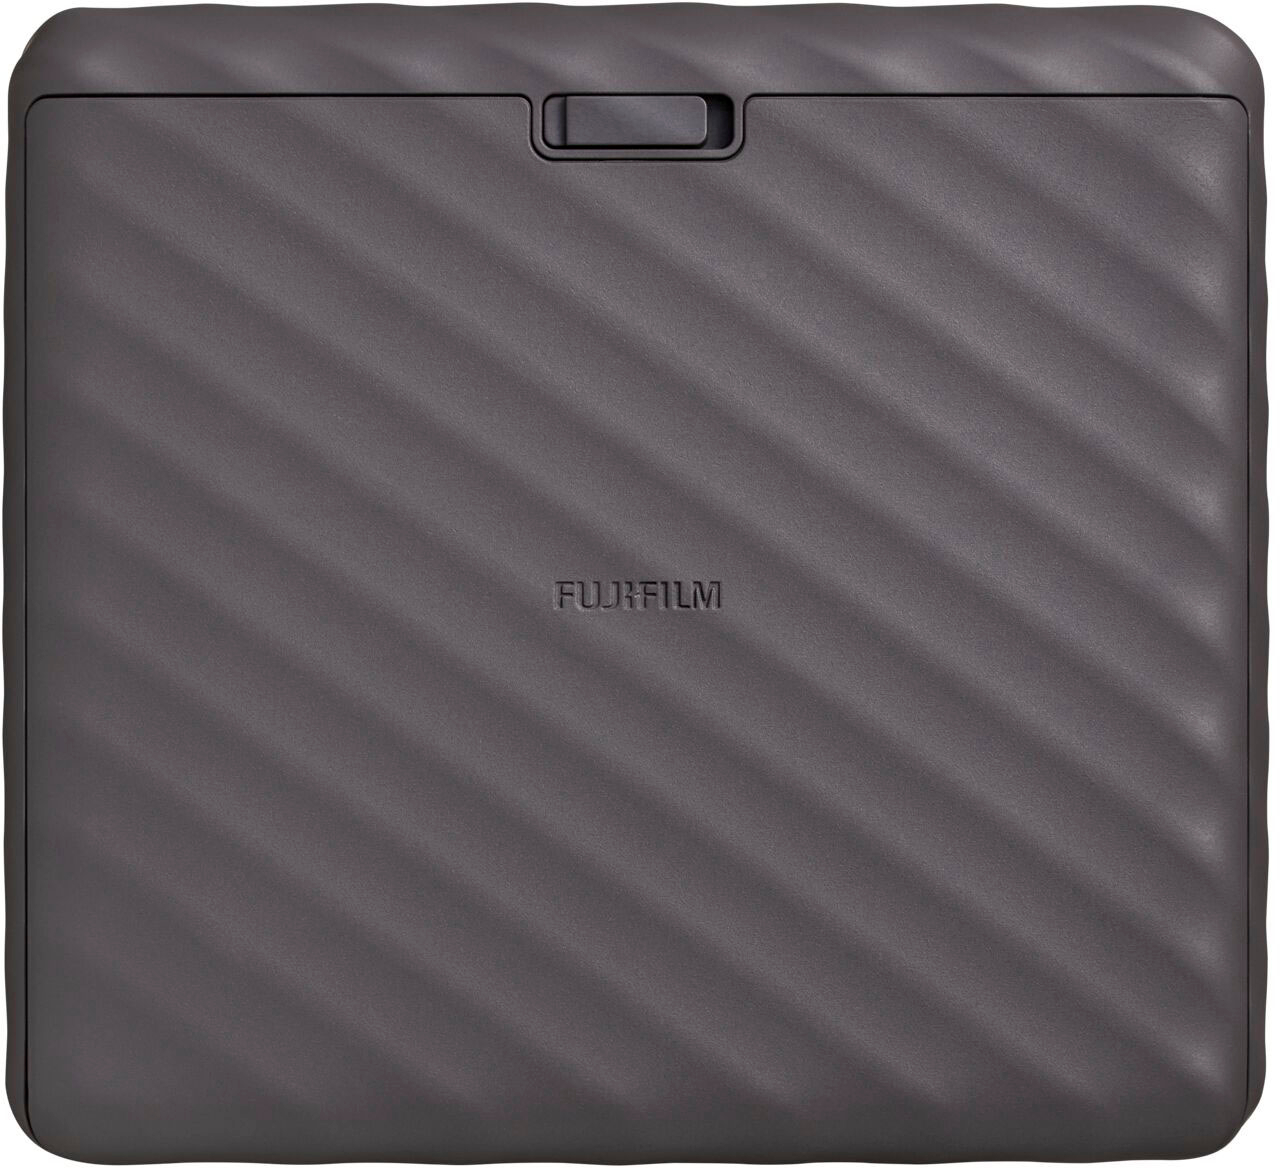 Fujifilm Instax Link Wide Smartphone Printer, Mocha Gray 16719562